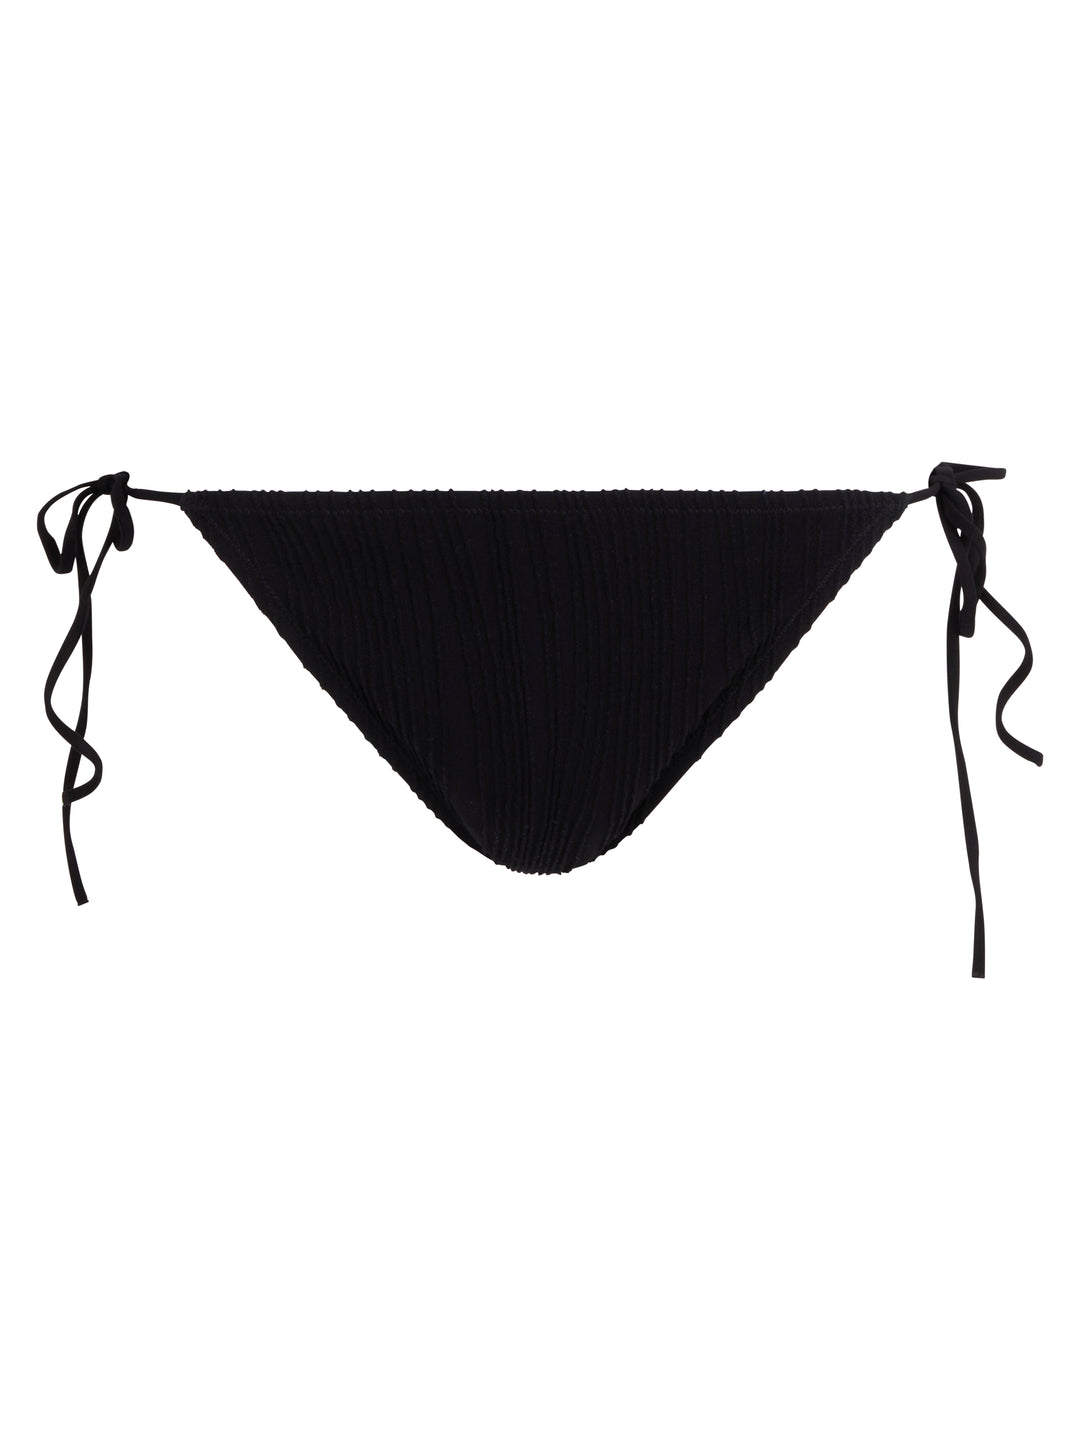 Chantelle Swimwear - Swim One Size Bikini Black